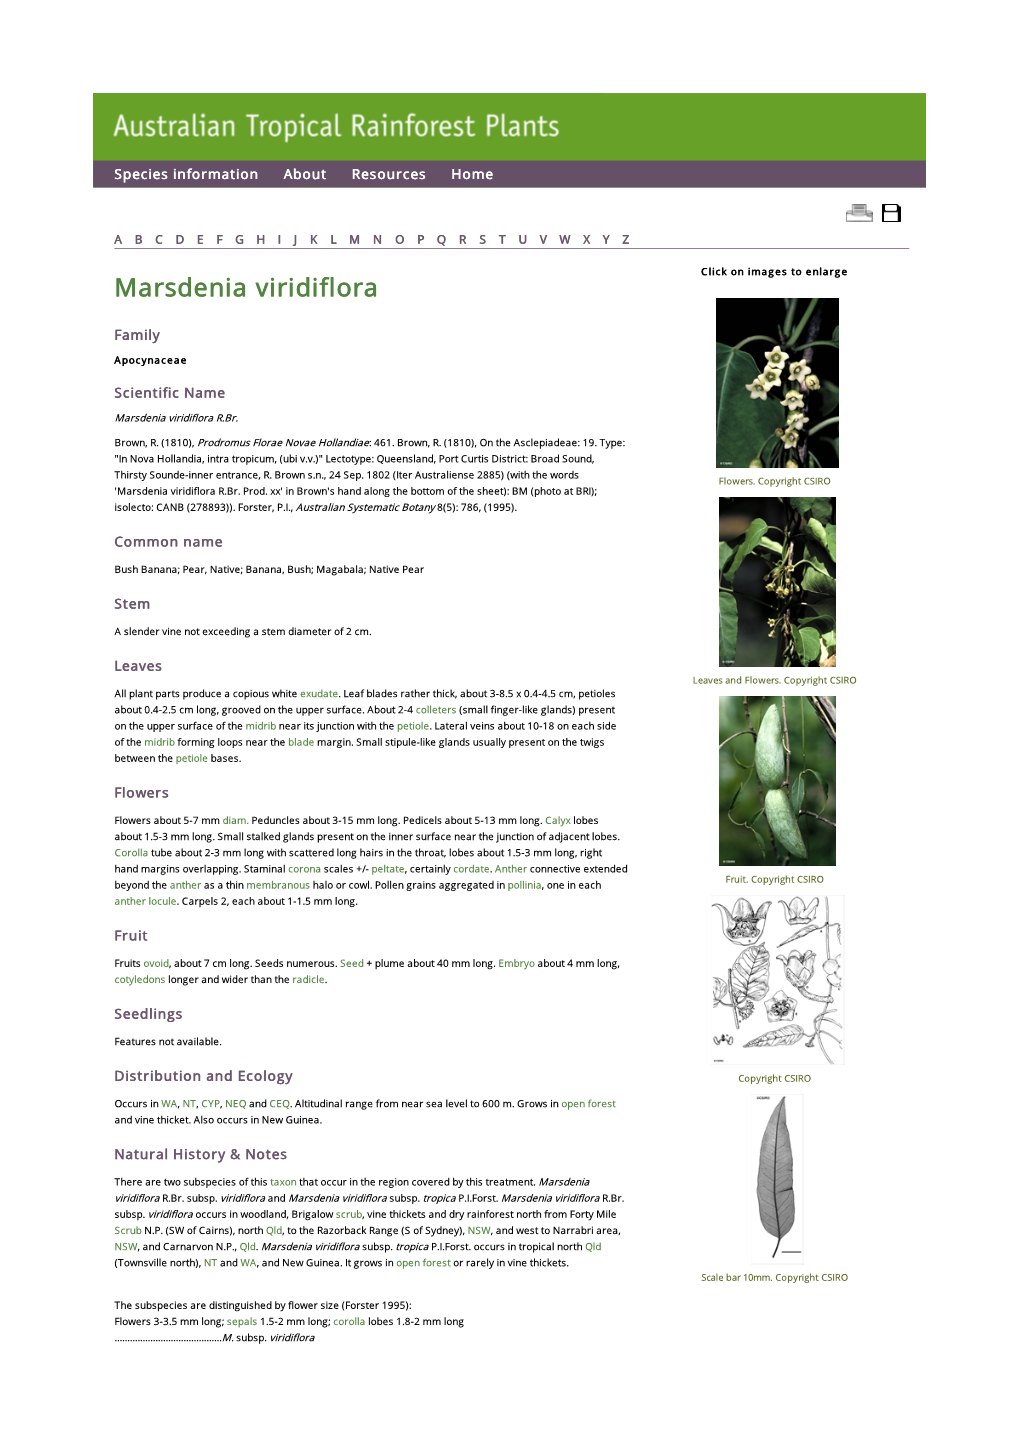 Marsdenia Viridiflora Click on Images to Enlarge